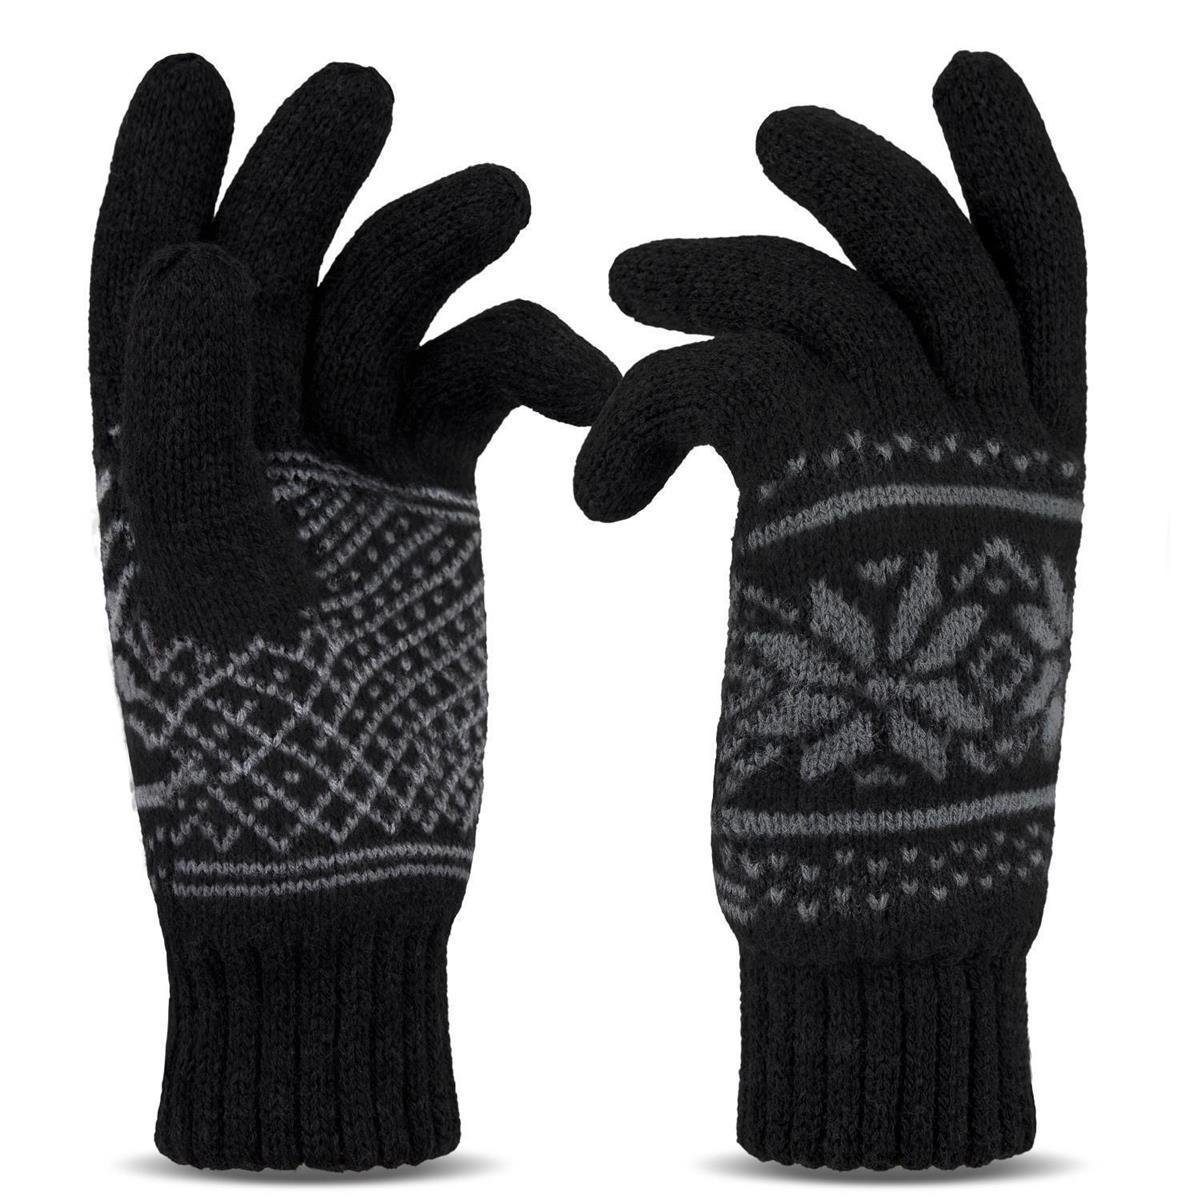 Tarjane Strickhandschuhe 3M Thinsulate Unisex Handschuhe Schwarz mit Muster | Strickhandschuhe